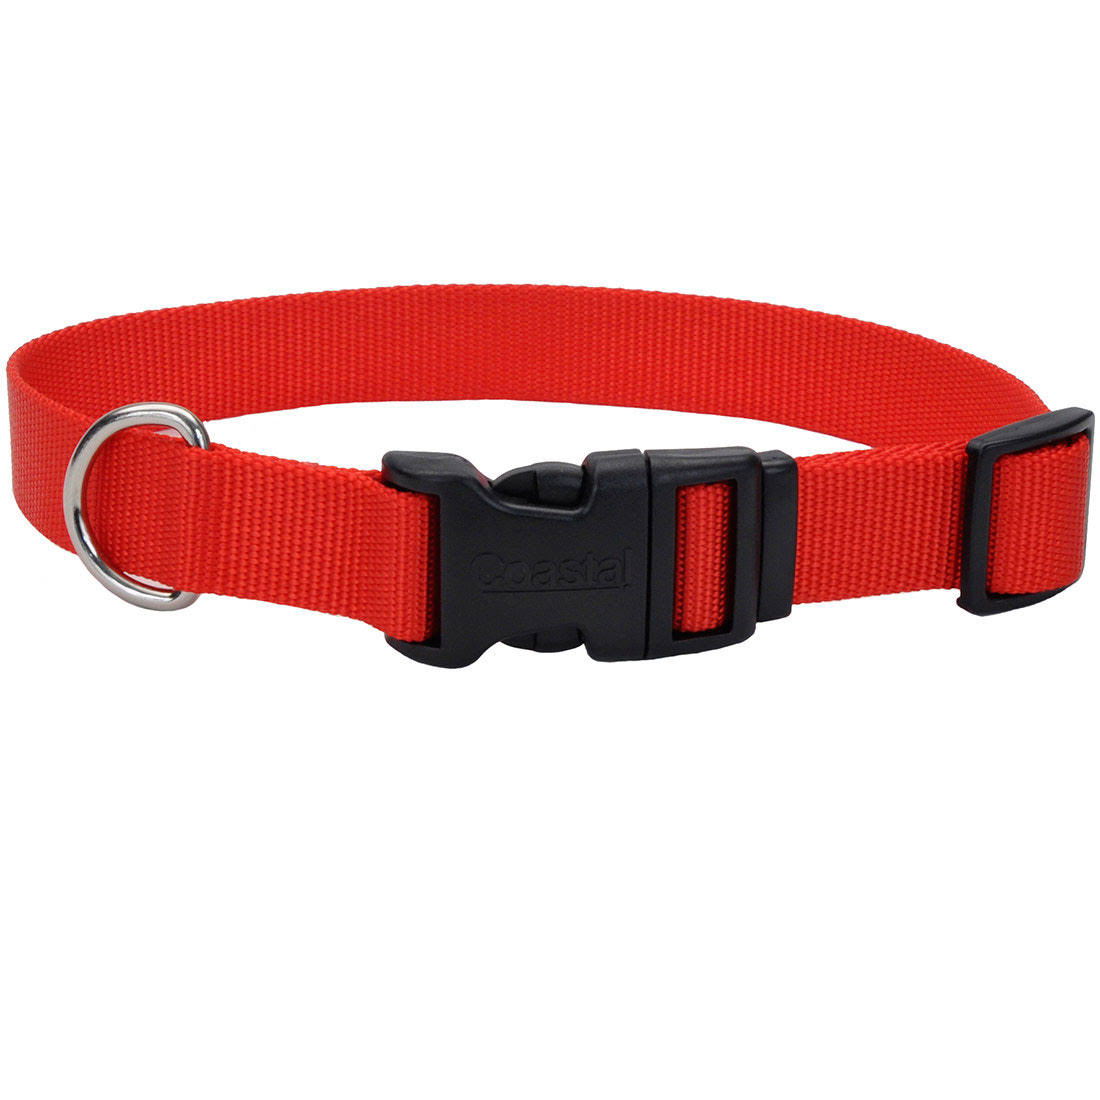 Coastal Pet Products Nylon Adjustable Collar - Red, Small